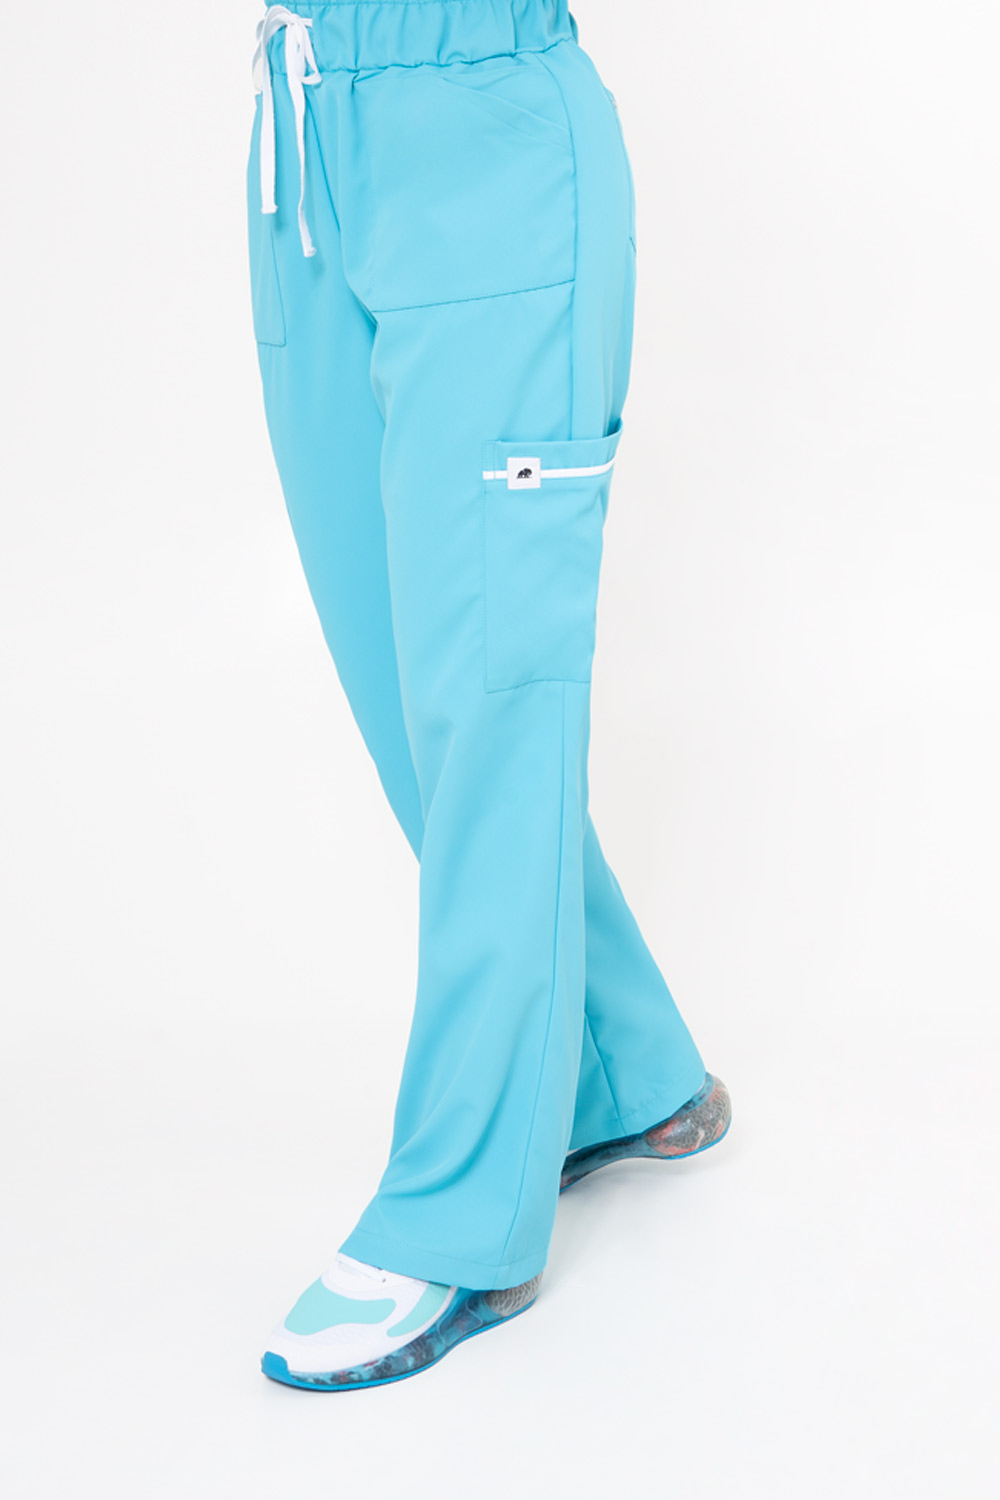 https://gaphant.com/wp-content/uploads/2022/06/gaphant-uniformes-medicos-de-mujer-pantalon-azul-claro-9.jpg